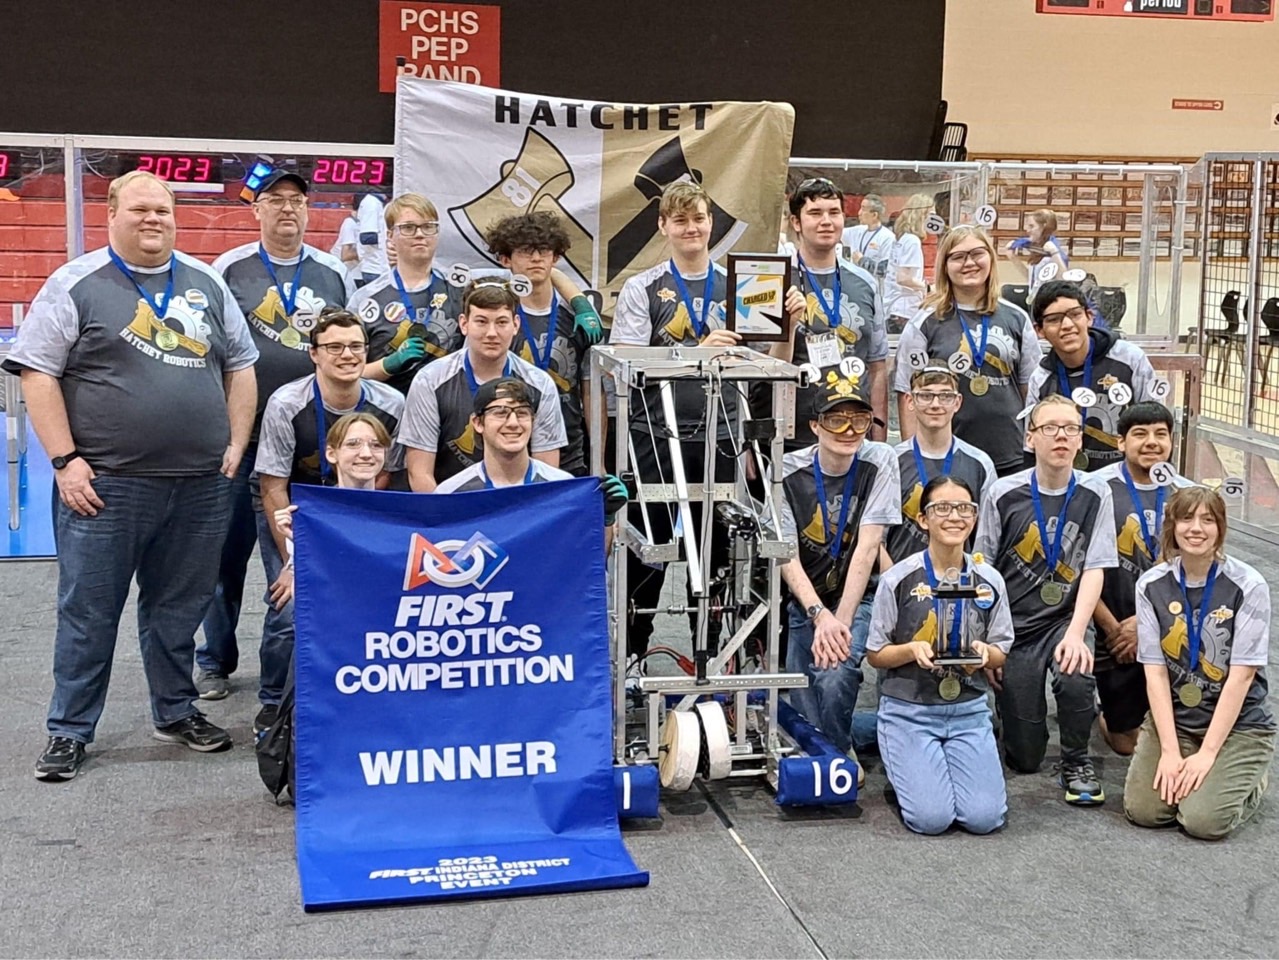 2,000 expected to attend robotics tournament at Washington’s Hatchet ...